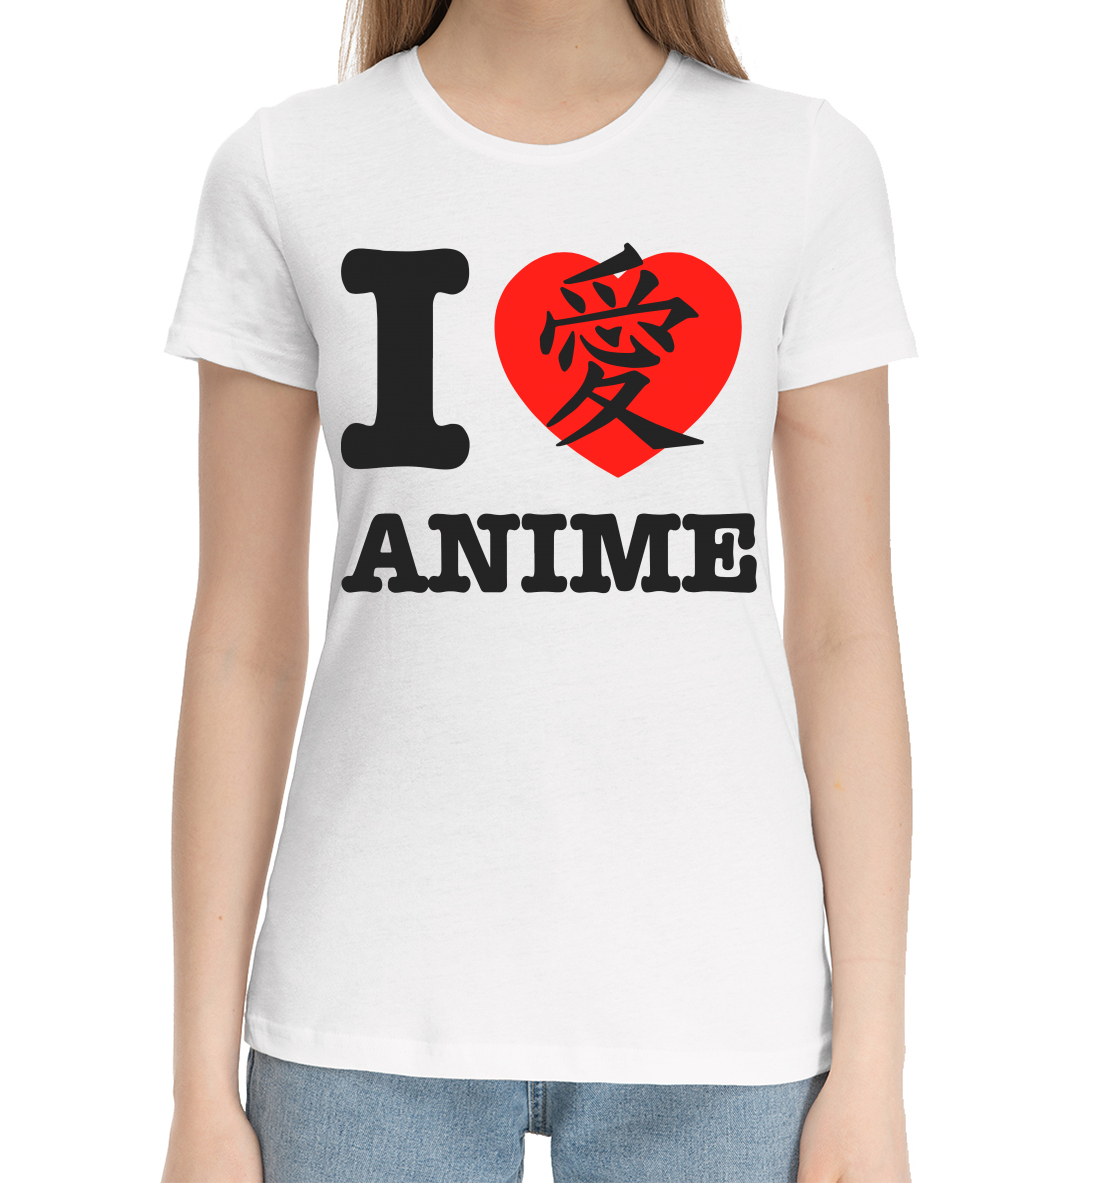 Женская Хлопковая футболка с принтом I like anime, артикул AHG-931540-hfu-1mp